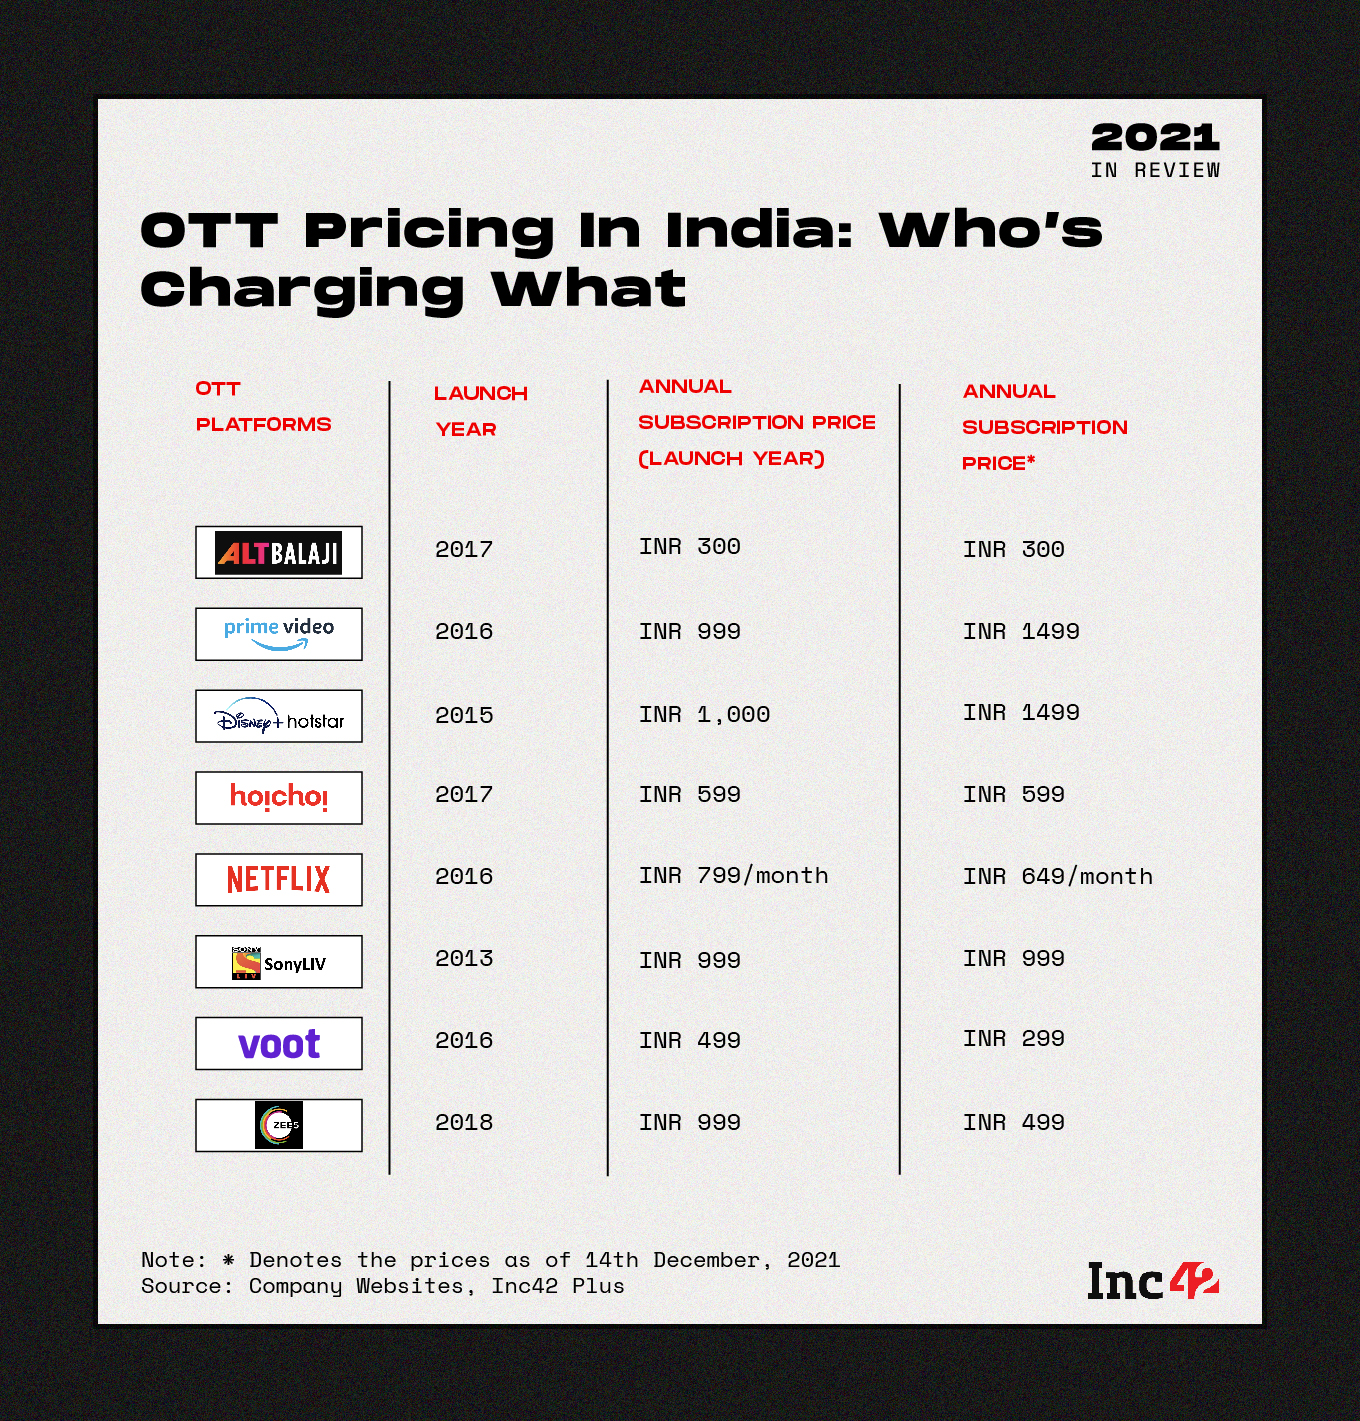 OTT Pricing In India